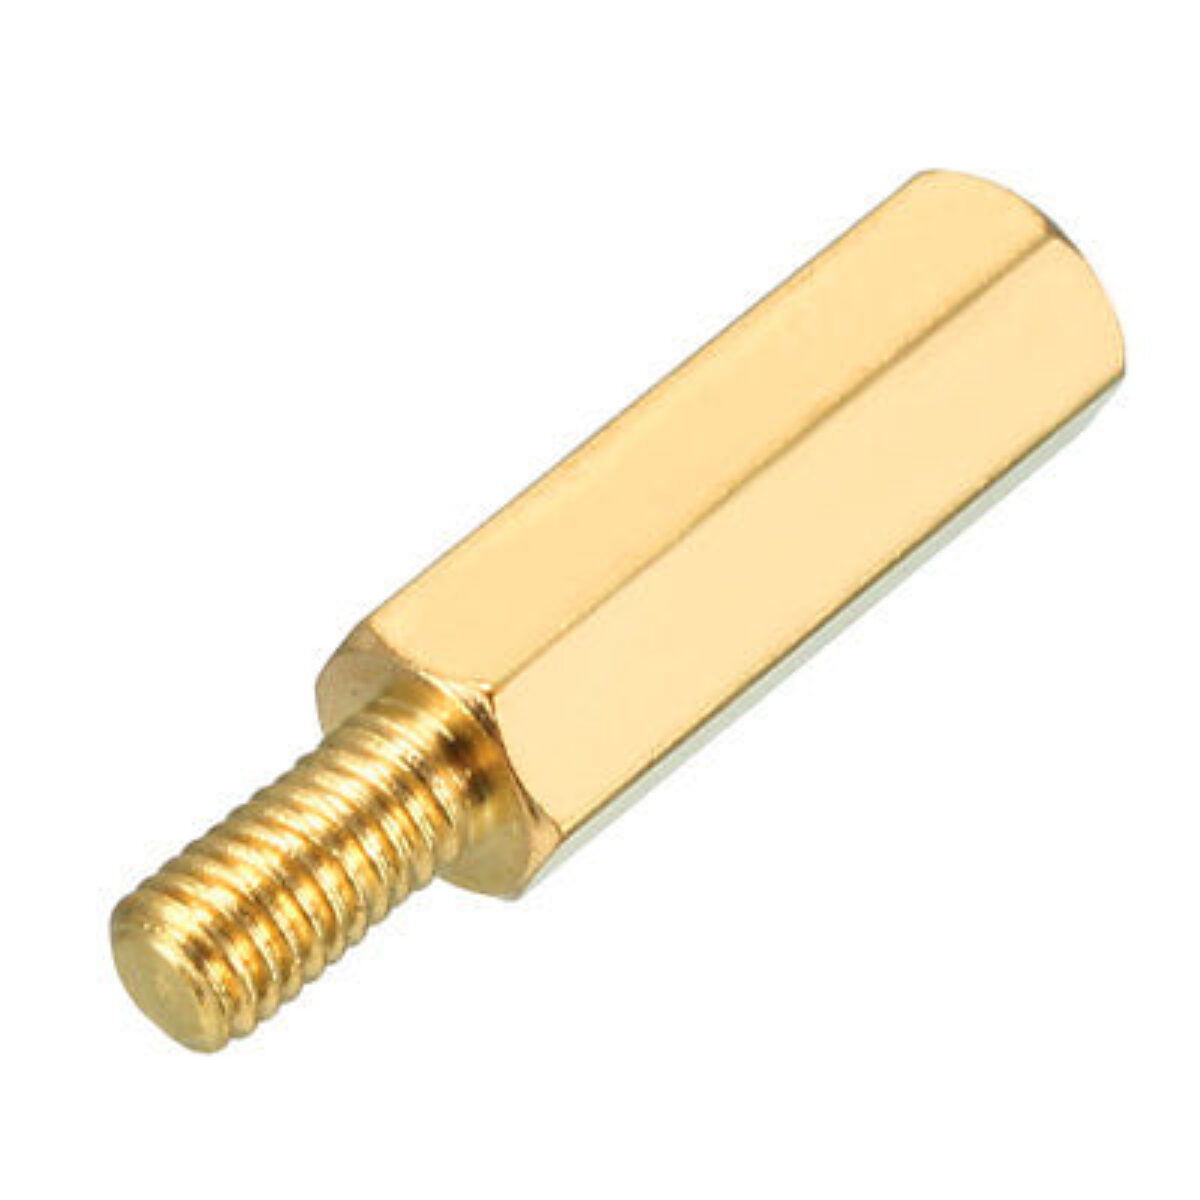 M3 x 20mm Female Thread Brass Hex Standoff Pillar Rod Spacer Coupler Nut  (25-pack) 